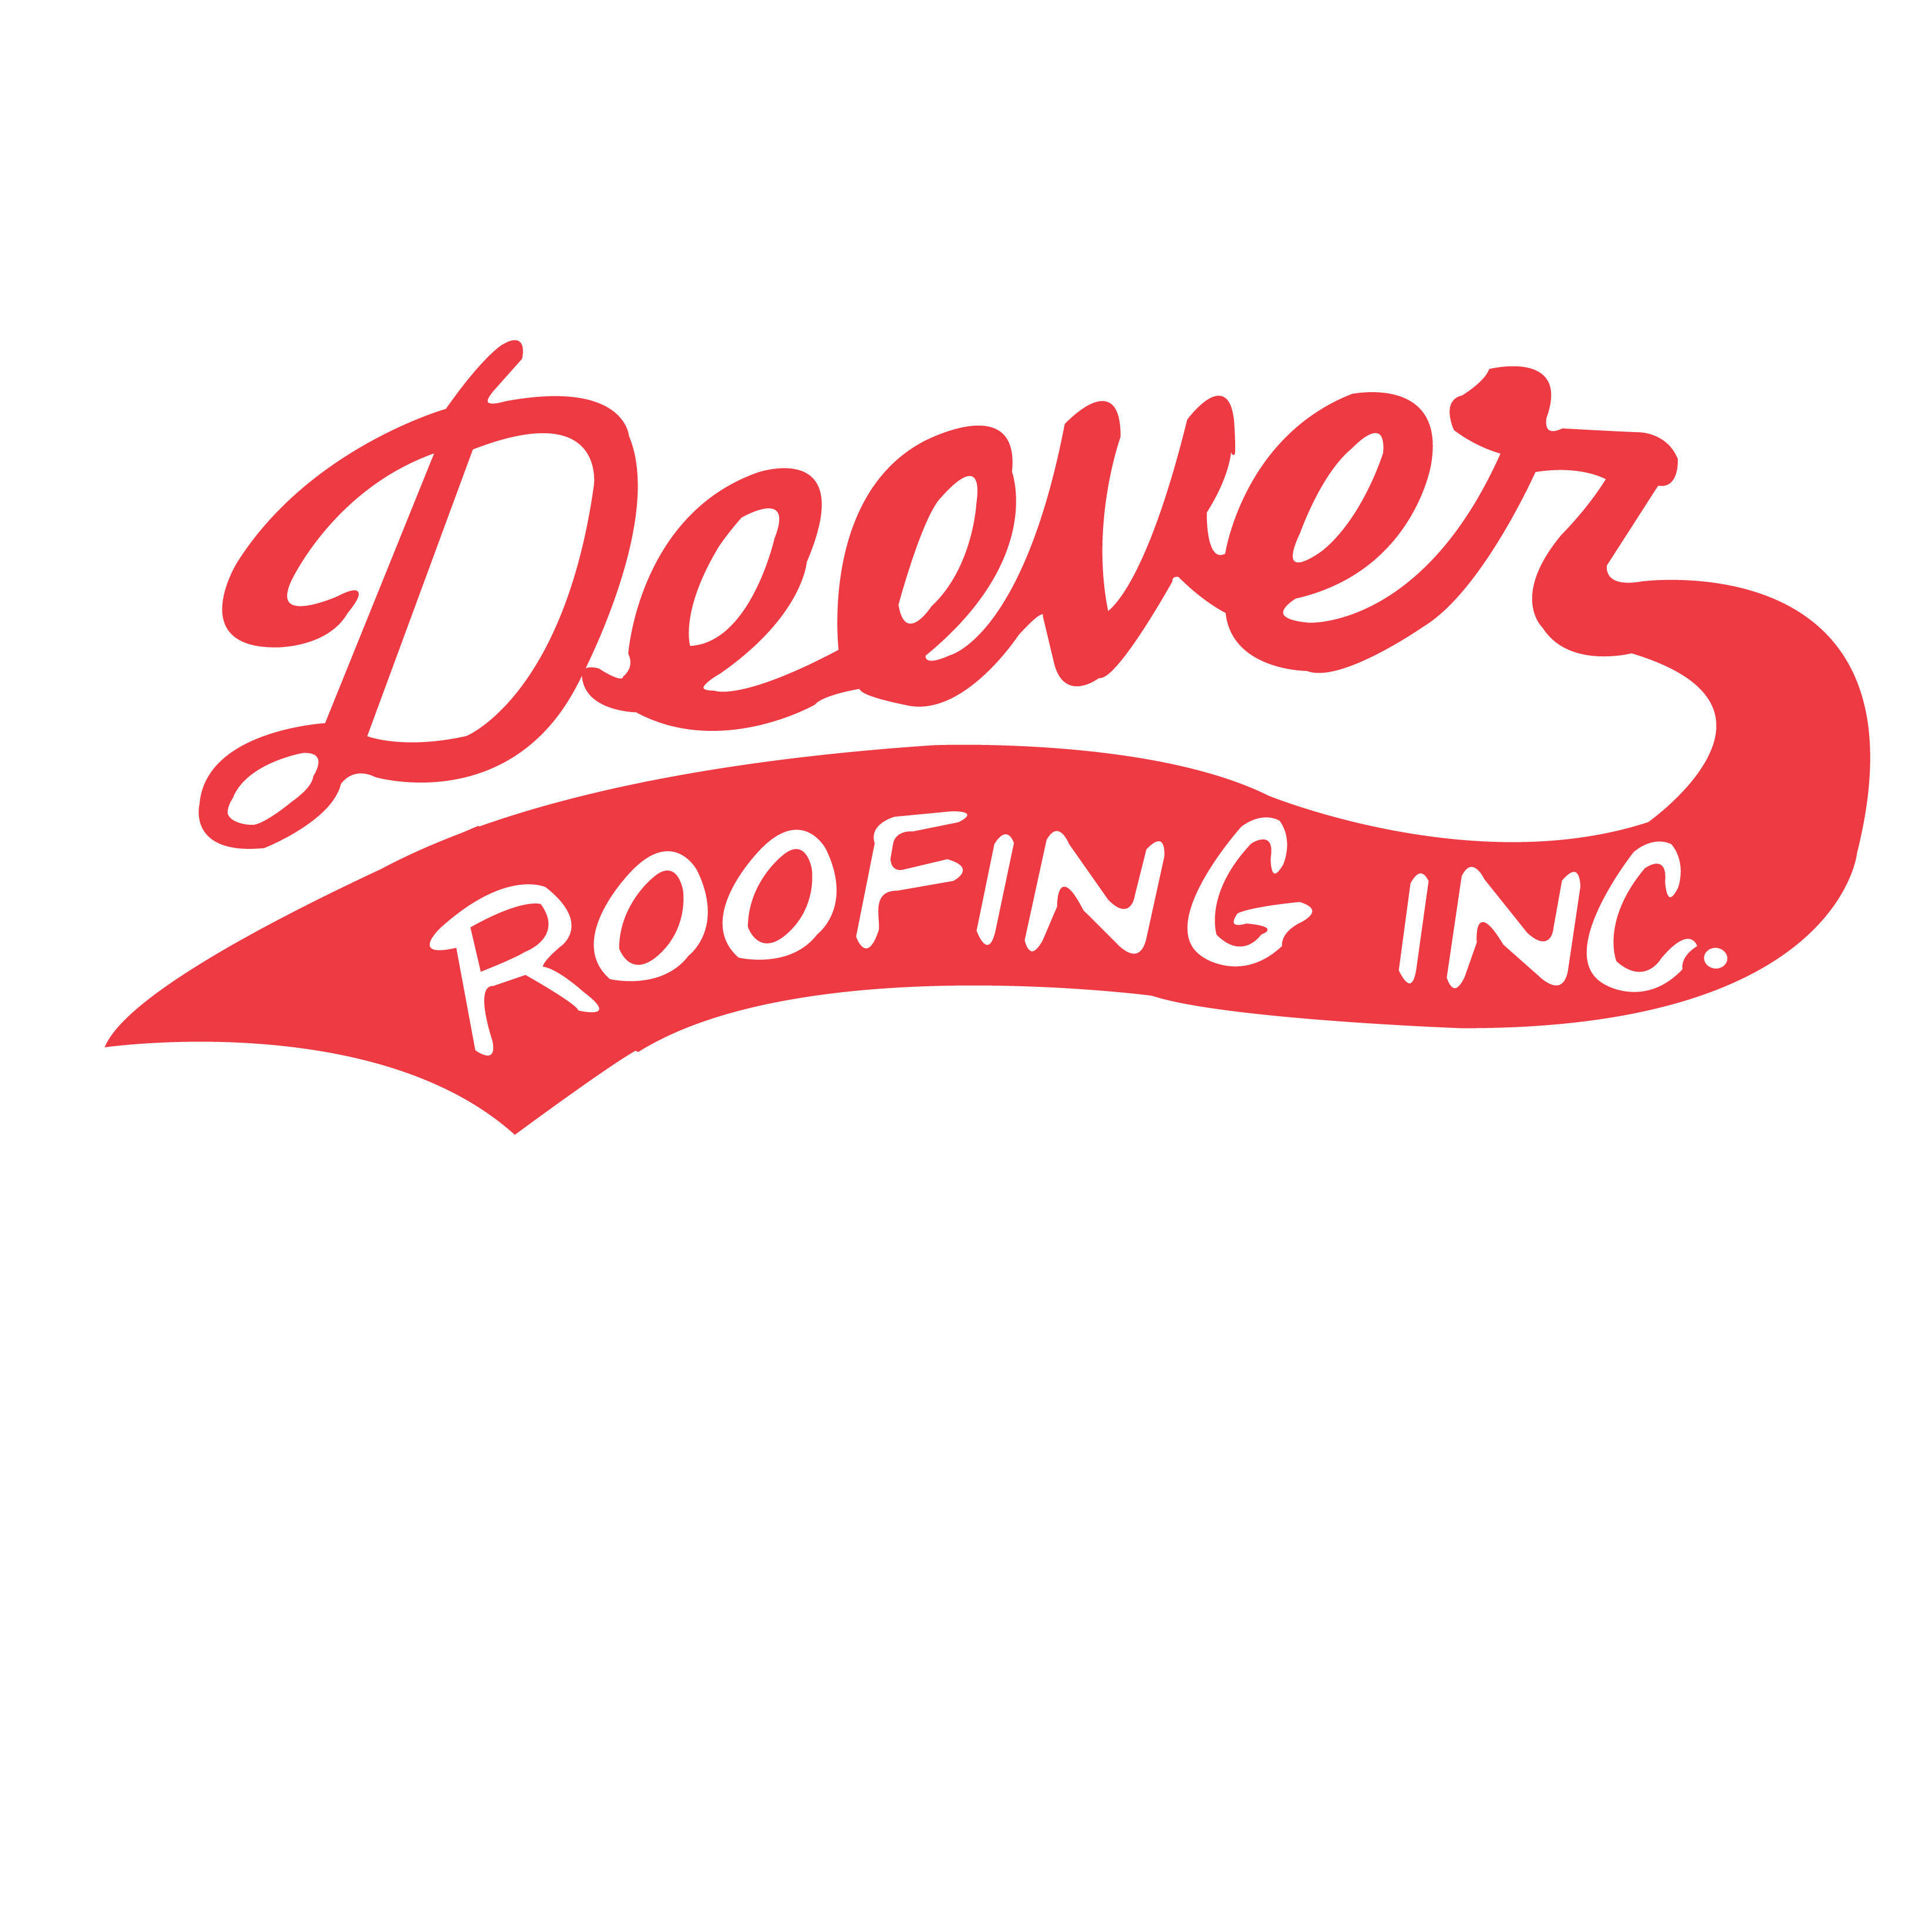 Deever Roofing Inc - Des Moines, IA 50316 - (515)262-9240 | ShowMeLocal.com